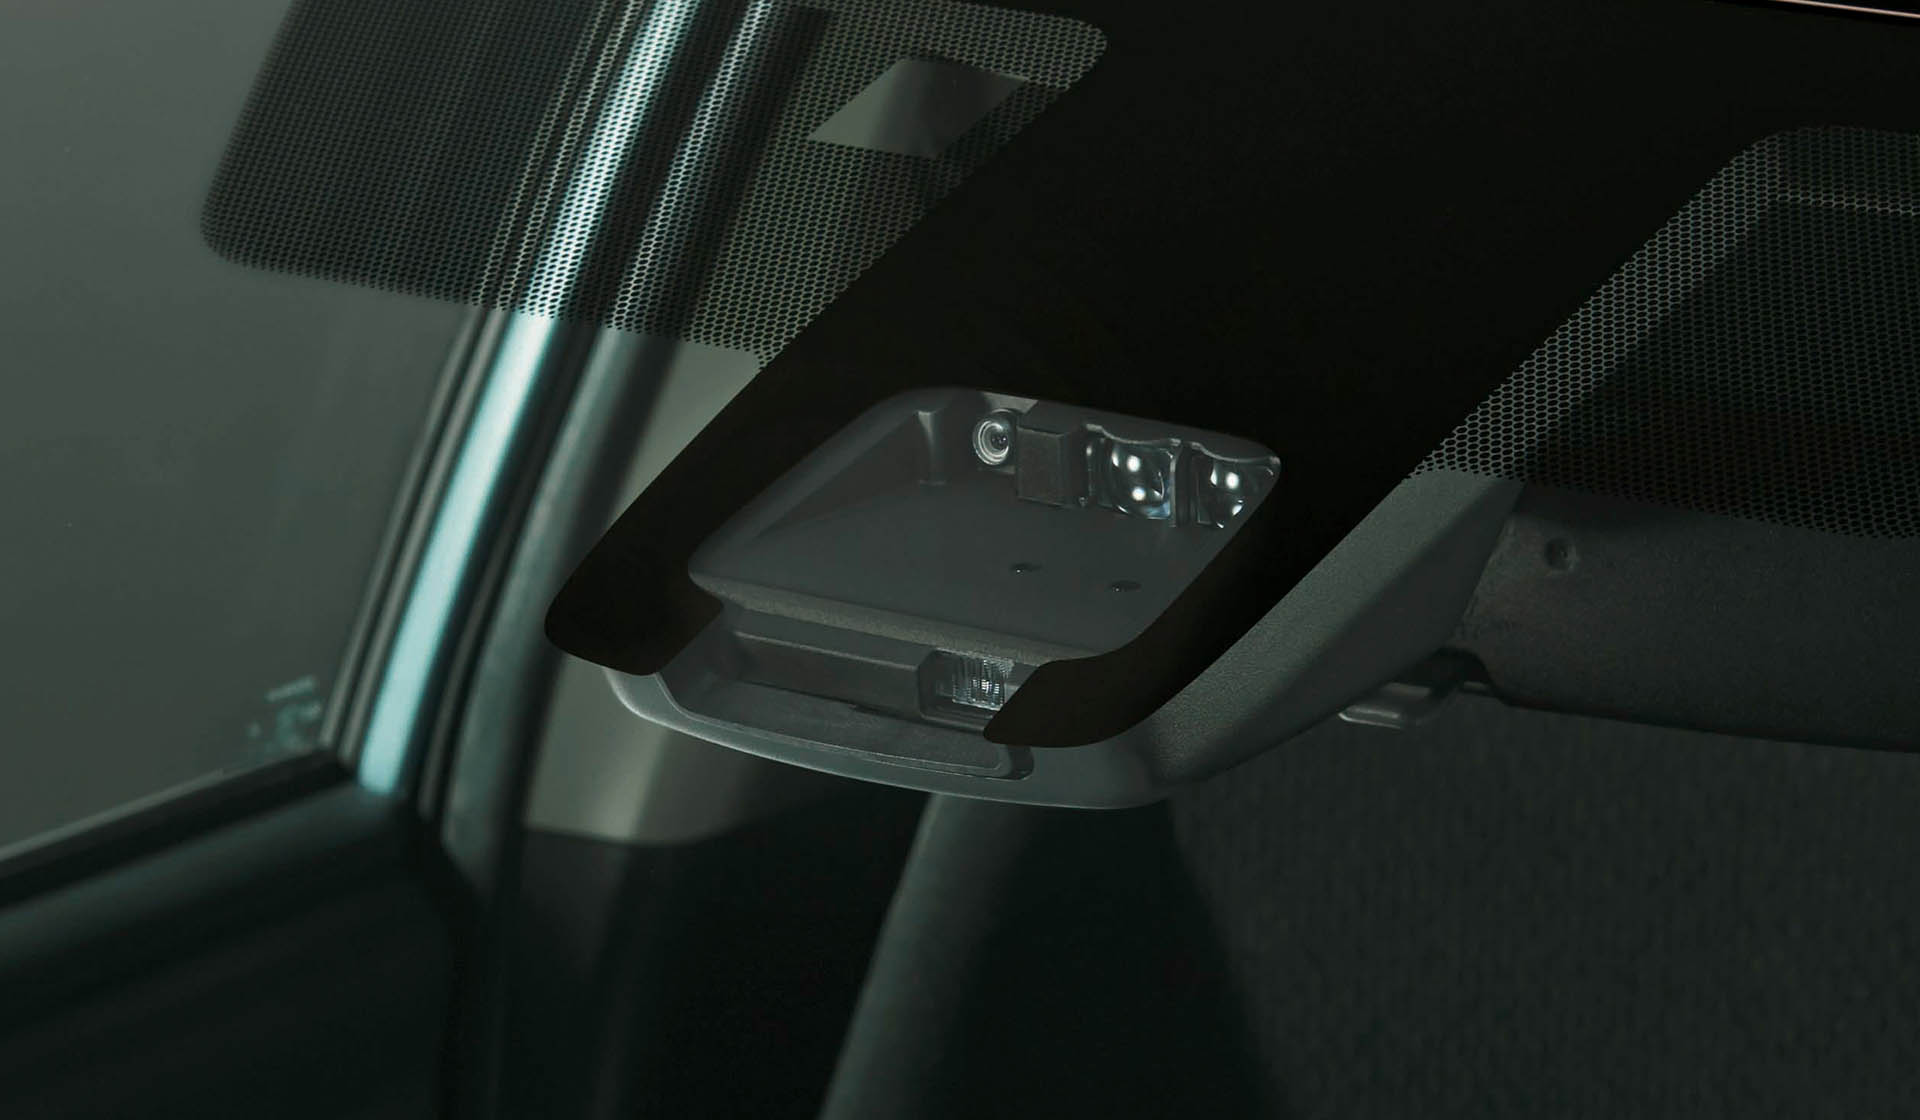 Toyota Safety Sense C sensors on board the Corolla Fielder